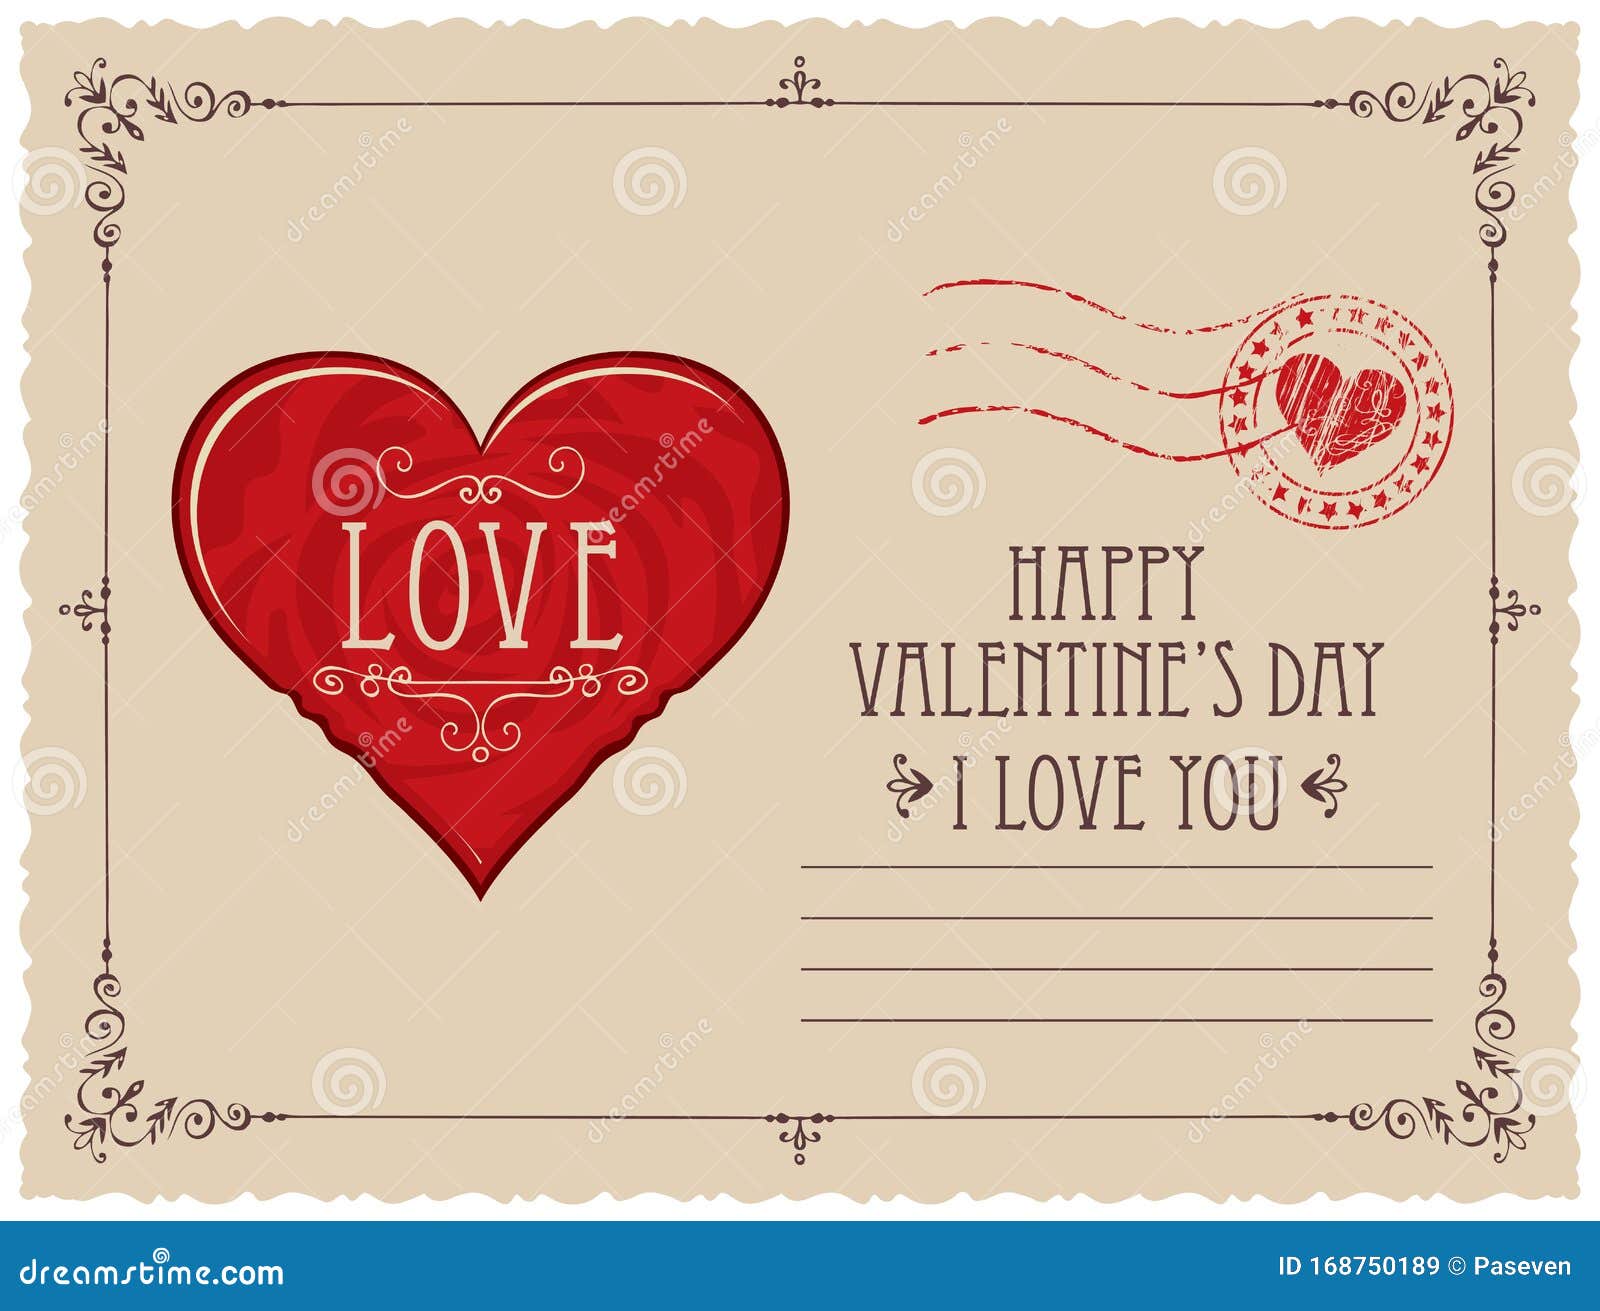 Retro vintage valentines day greeting card design Vector Image